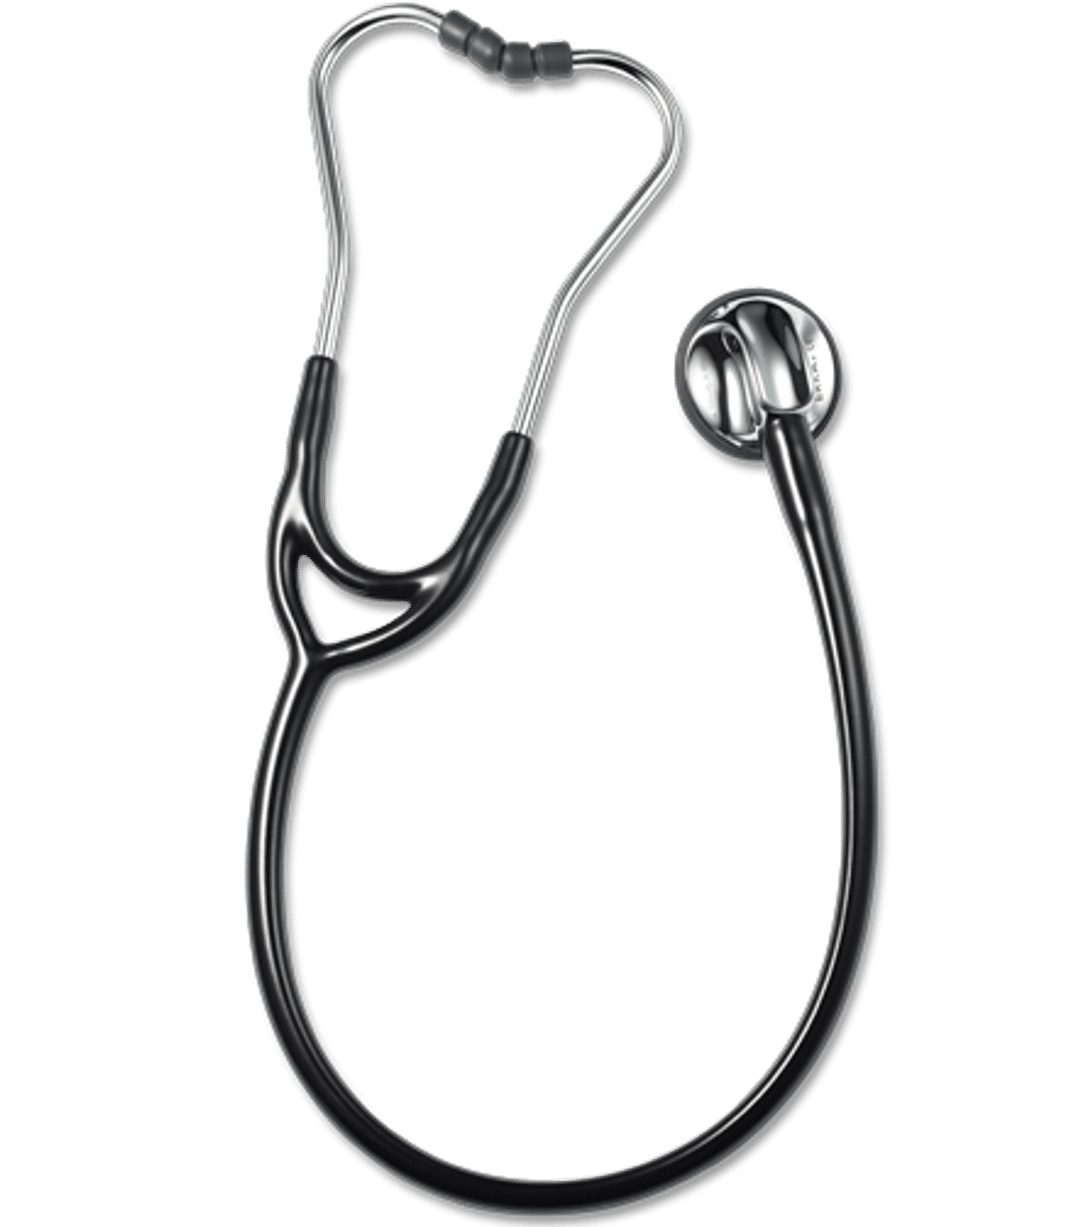 Erka Stethoscope (ES541) - Black